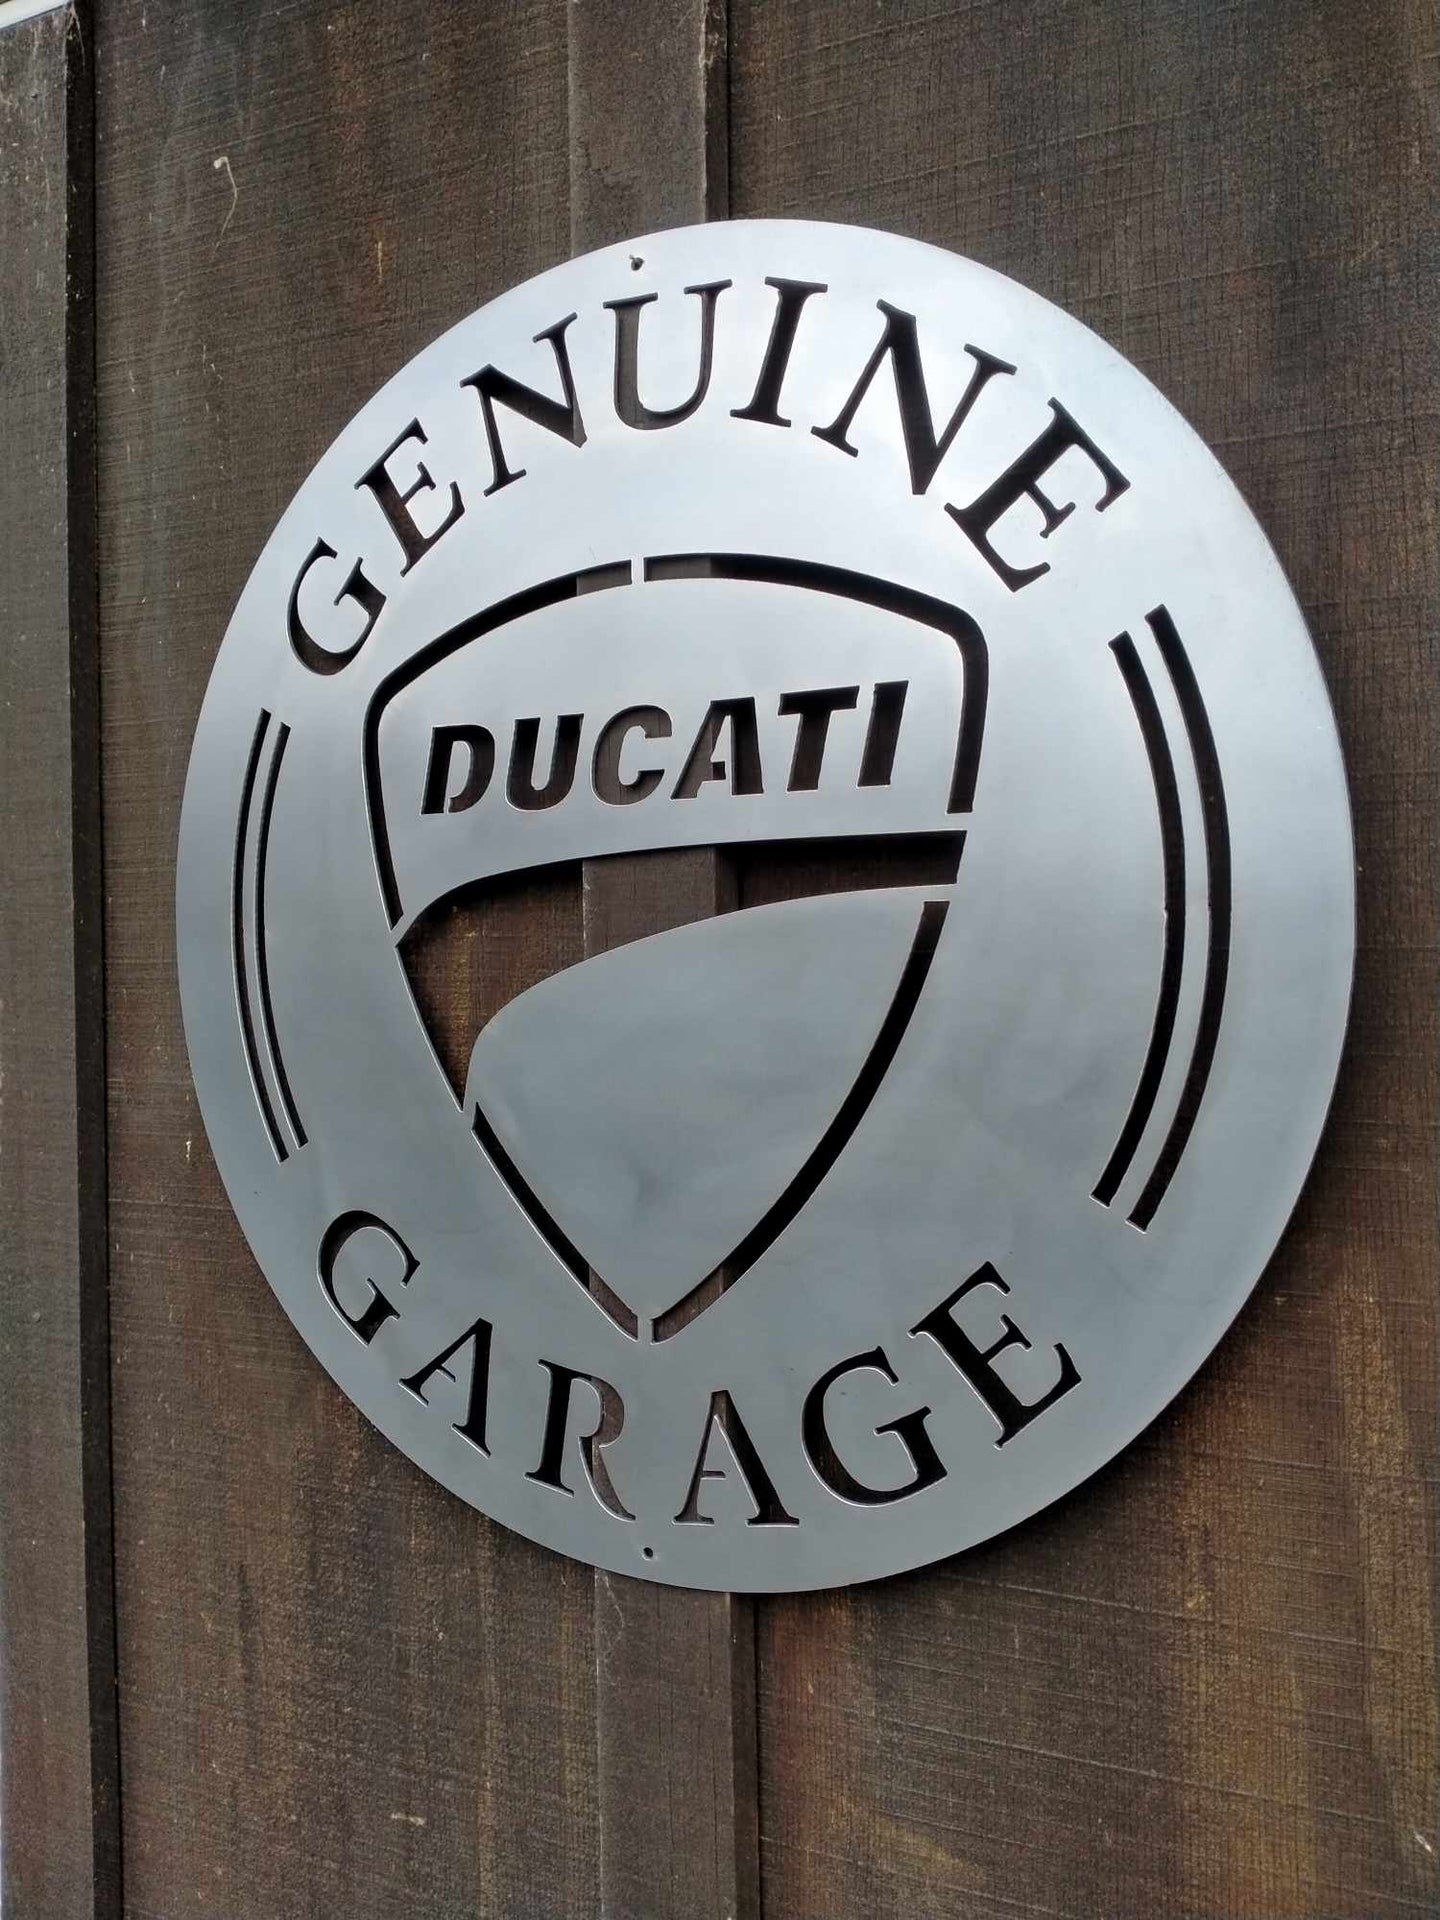 Ducati Garage